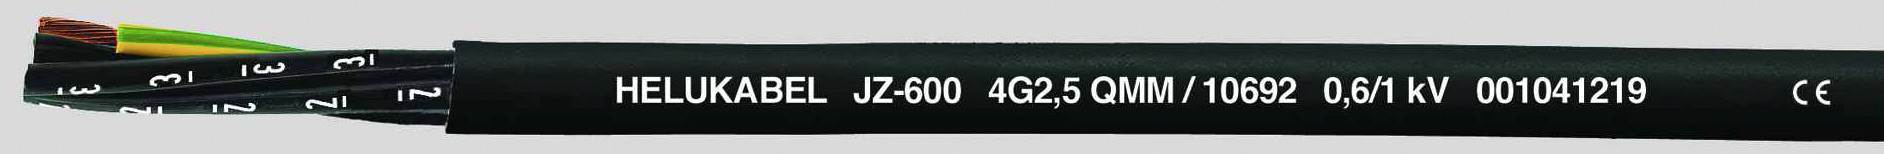 HELUKABEL JZ-600 Steuerleitung 8 G 1 mm² Schwarz 10626-500 500 m